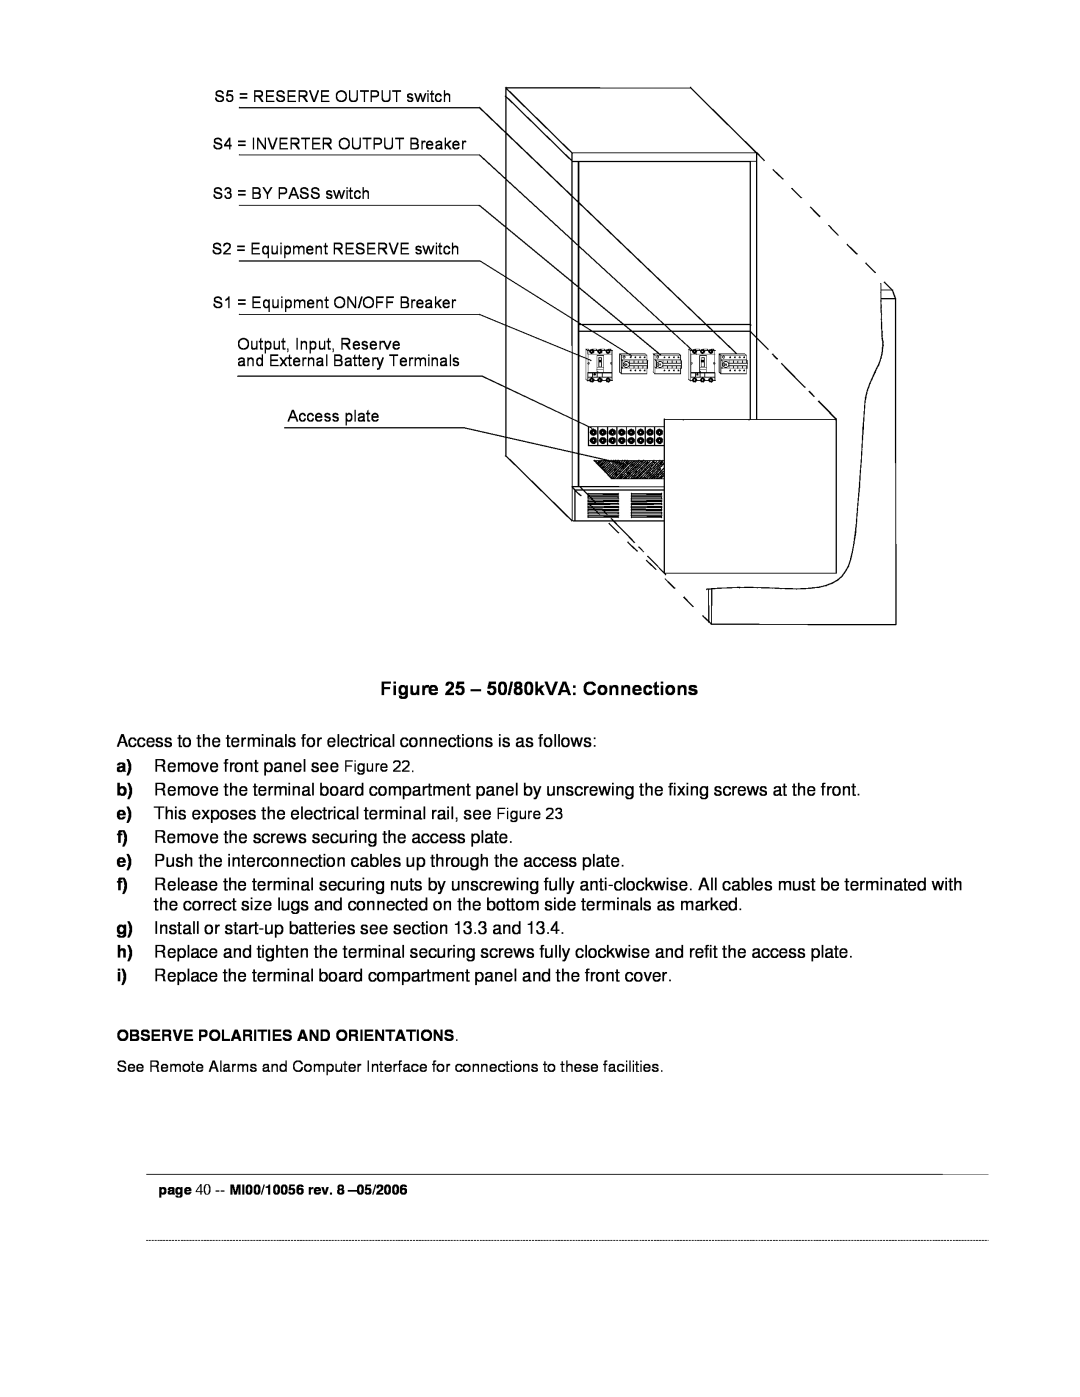 Garmin EDP70 manual 50/80kVA Connections, page 40 -- MI00/10056 rev. 8 -05/2006 